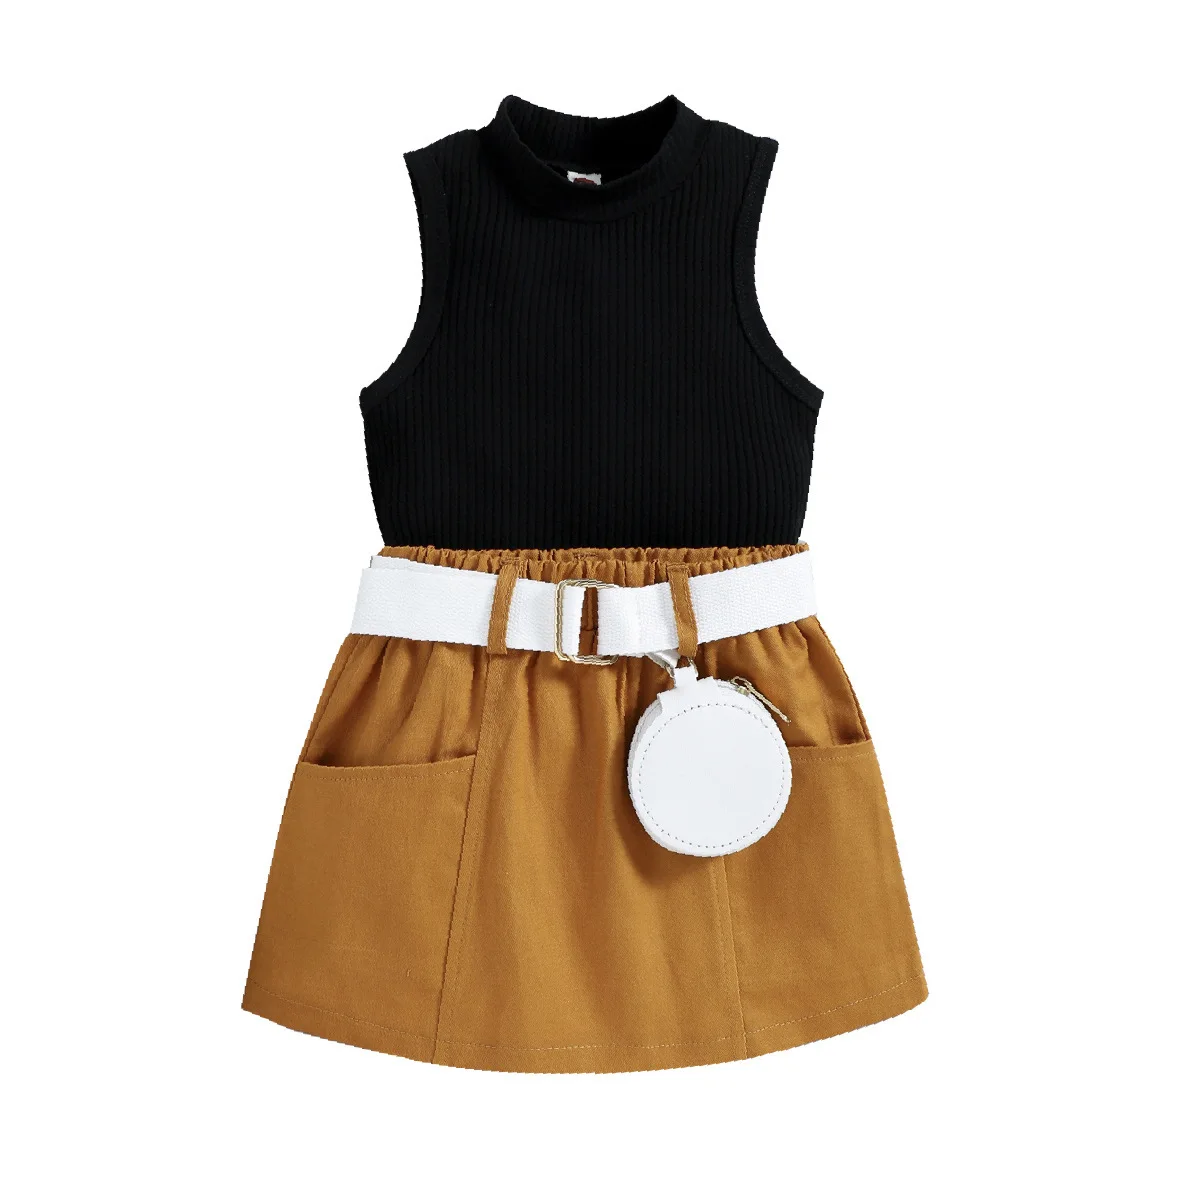 New arrival summer toddler girls clothes fashion solid vest+skirt+belt bag 3pcs children's clothing kids outfits